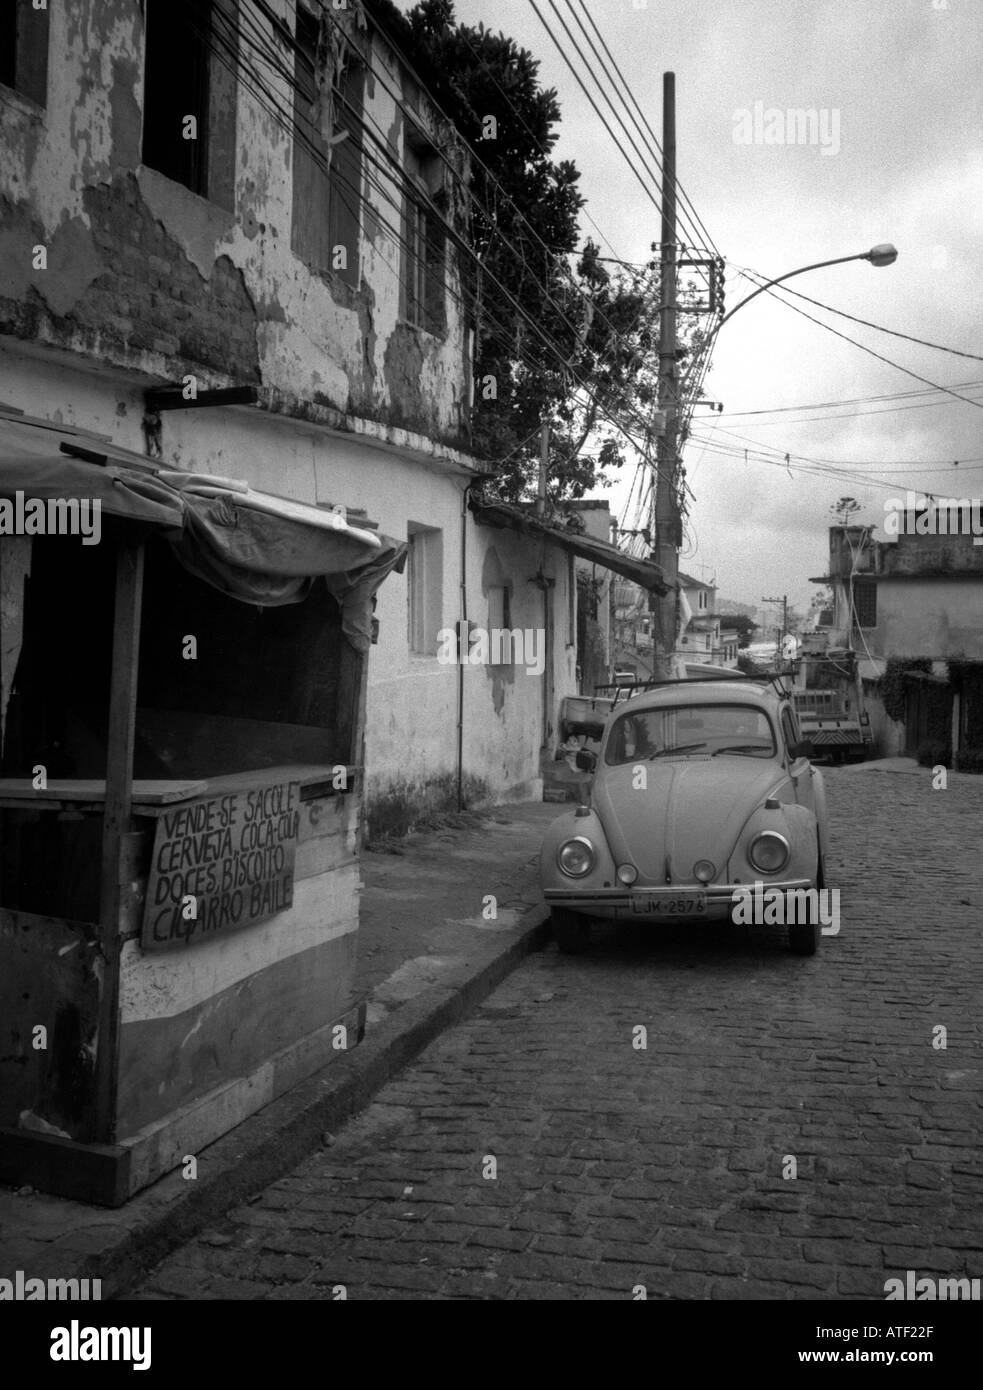 Detail typische Favela Hang alte Volkswagen Käfer Essen & Getränke Kiosk Vidigal Rio de Janeiro Brasilien Brasil Süden Lateinamerikas Stockfoto